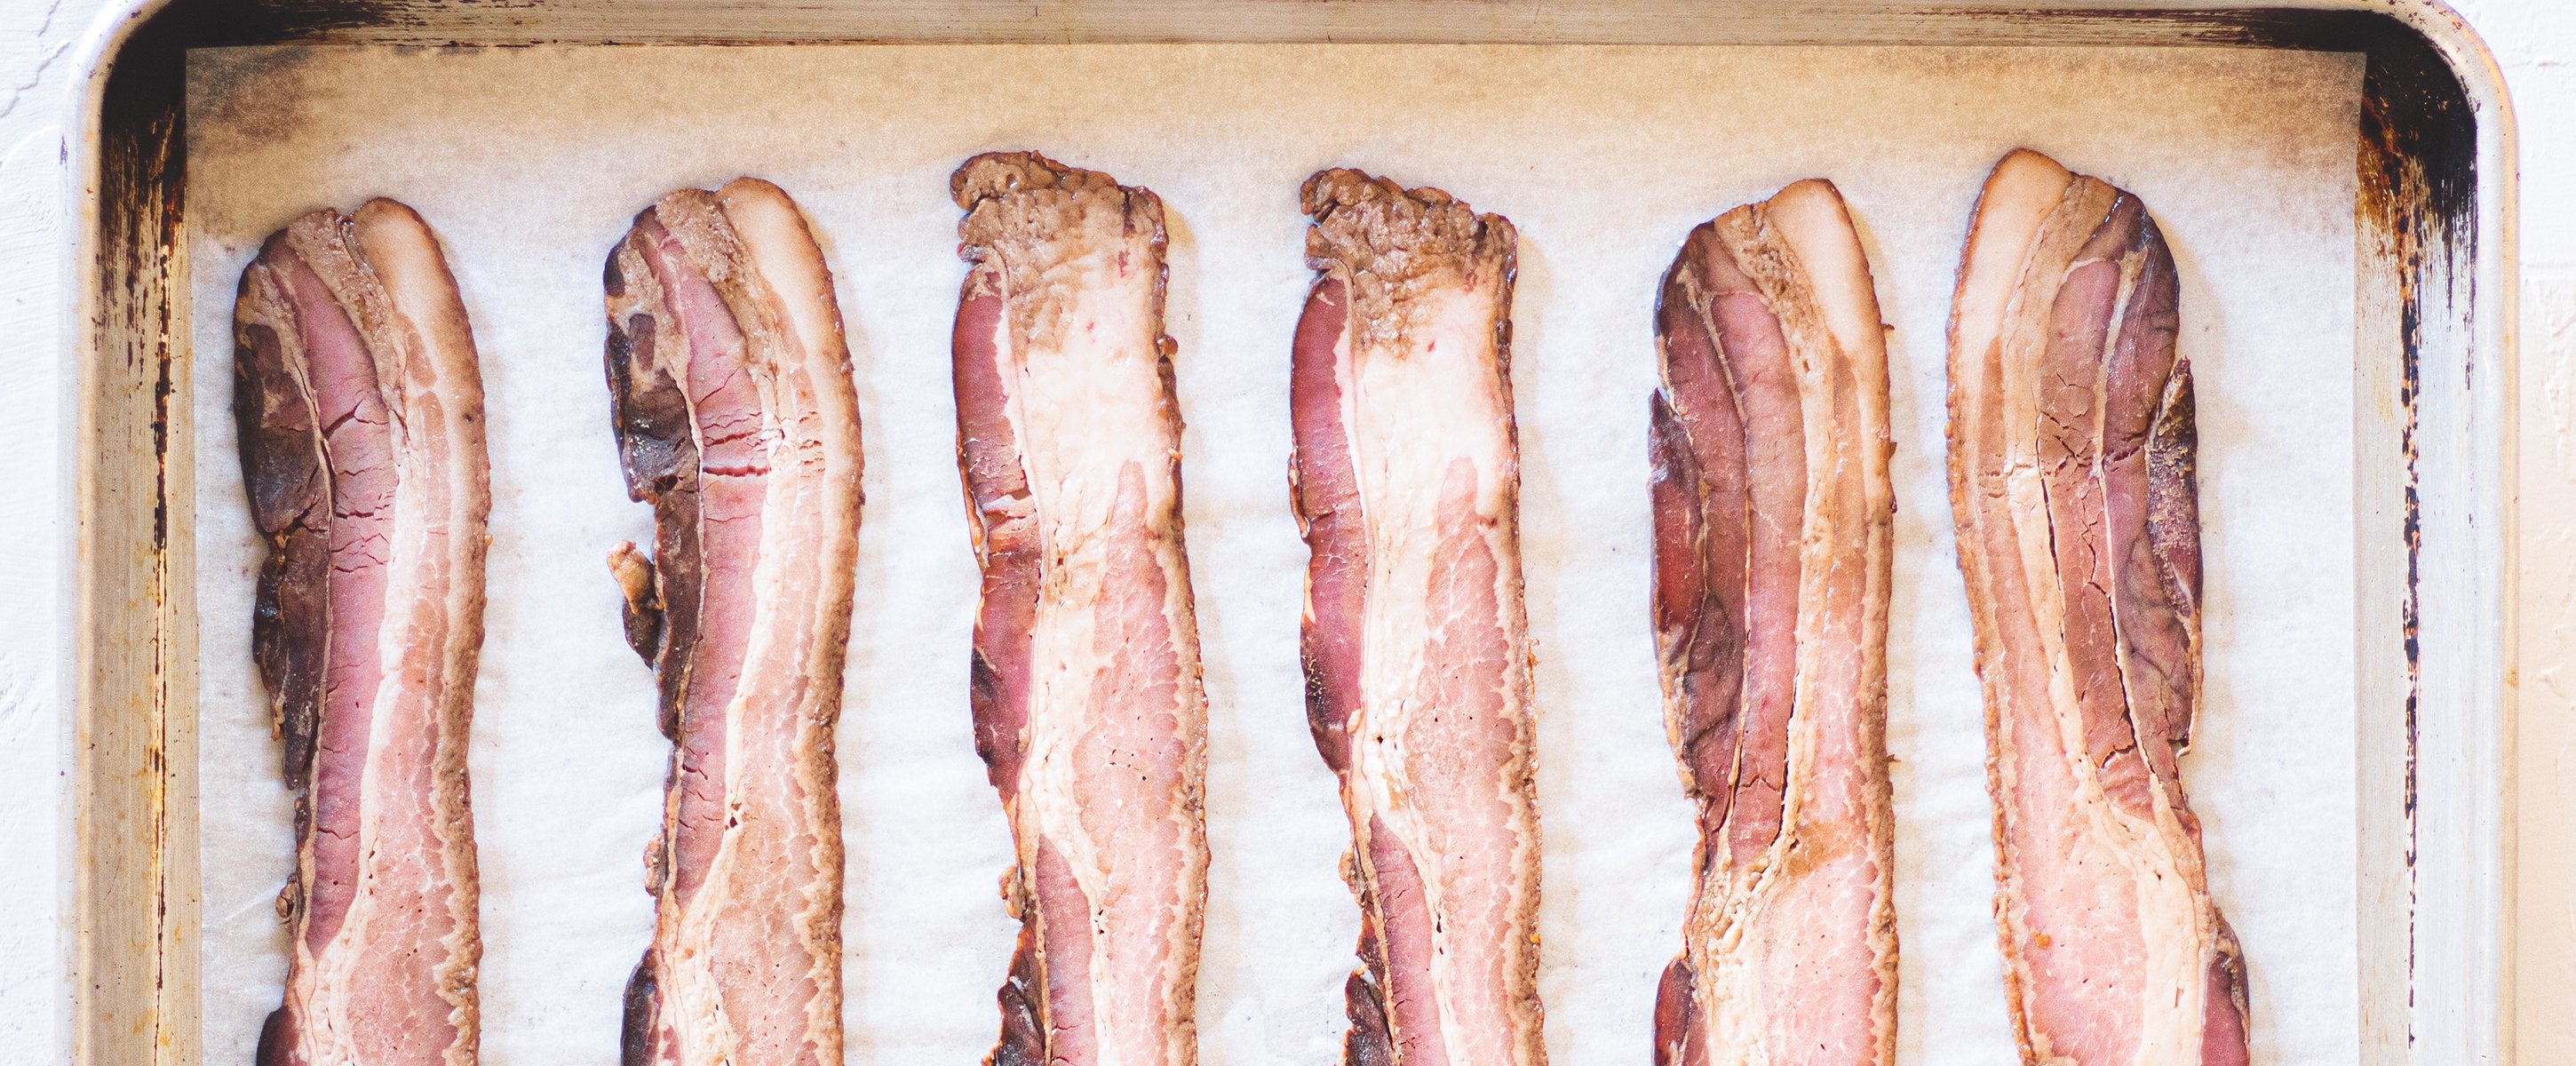 Sheet Pan Bacon Recipe – Kana